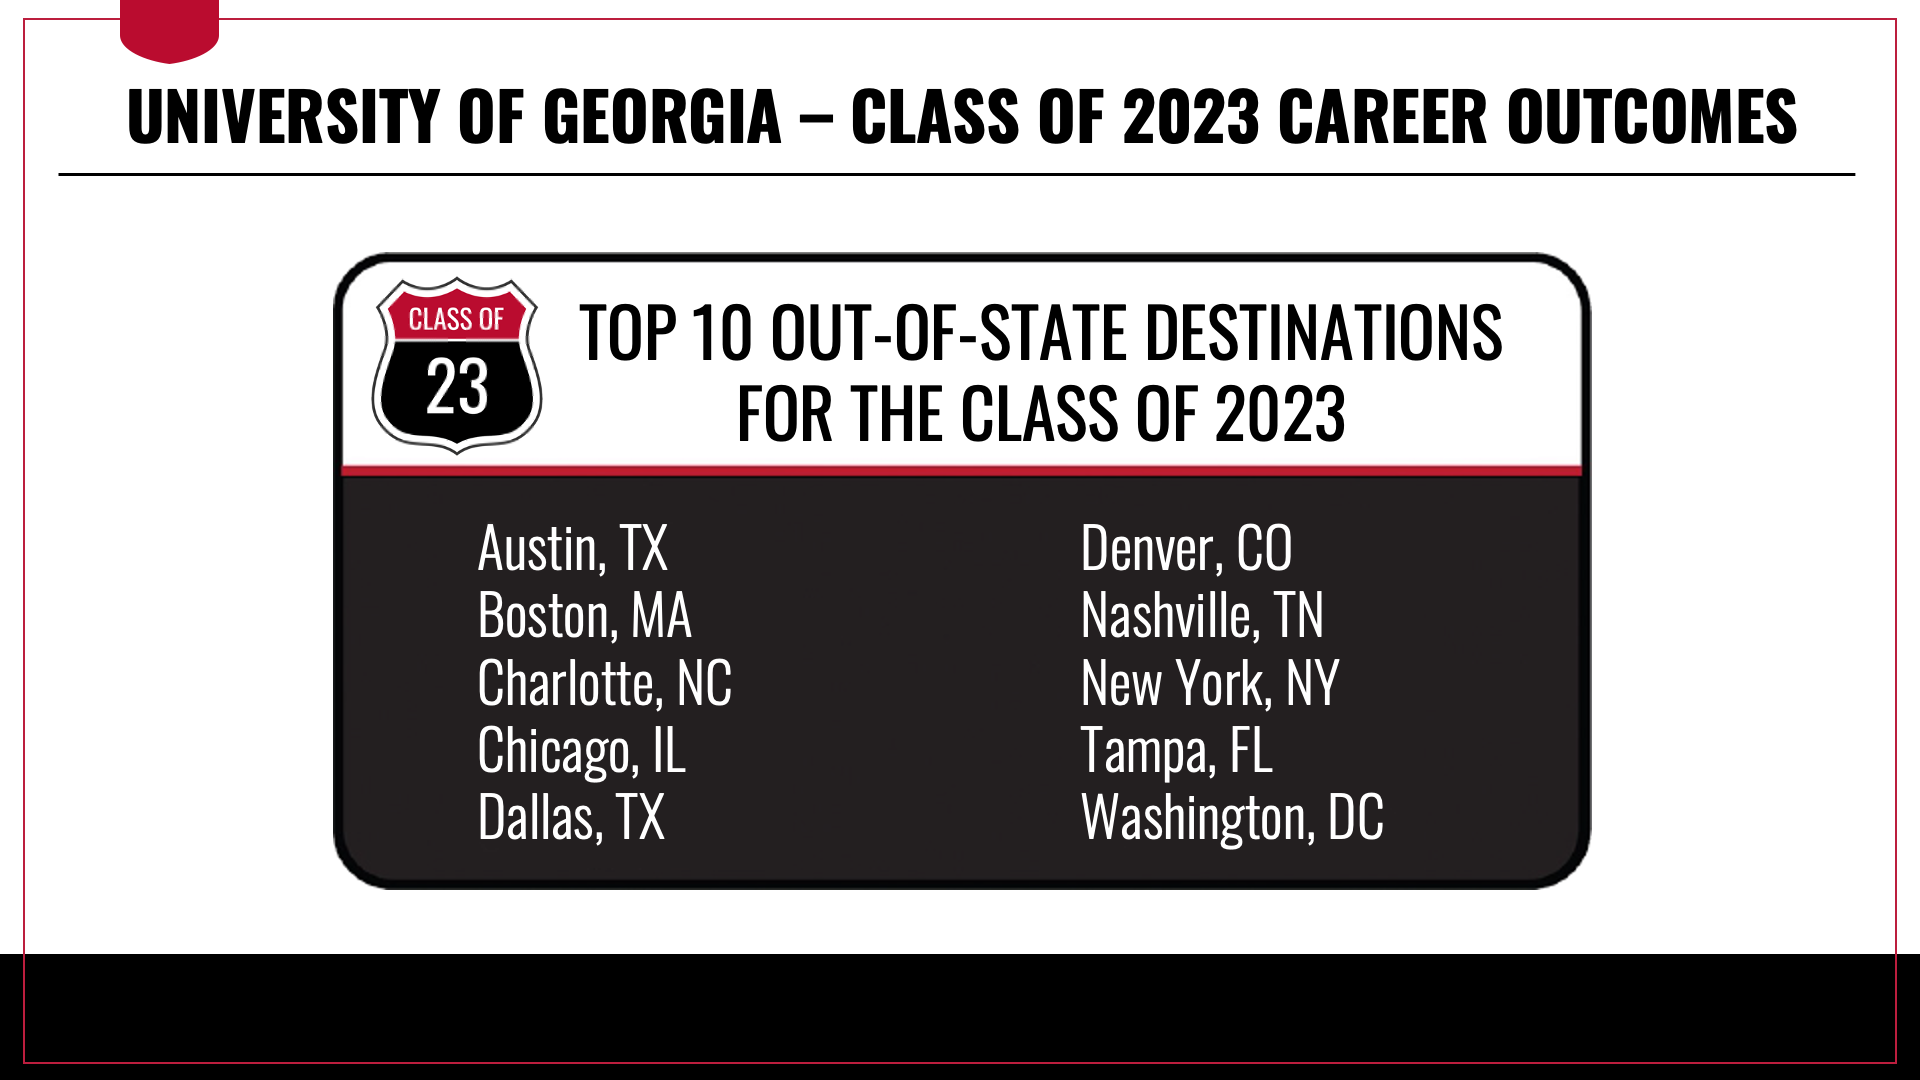 Top Out-of-State destinations for UGA Class of 2023 graduates include: Austin, Texas - Boston, Massachusetts - Charlotte, North Carolina - Chicago, Illinois - Dallas, Texas - Denver, Colorado - Nashville, Tennessee - New York, New York - Tampa, Florida - Washington, DC